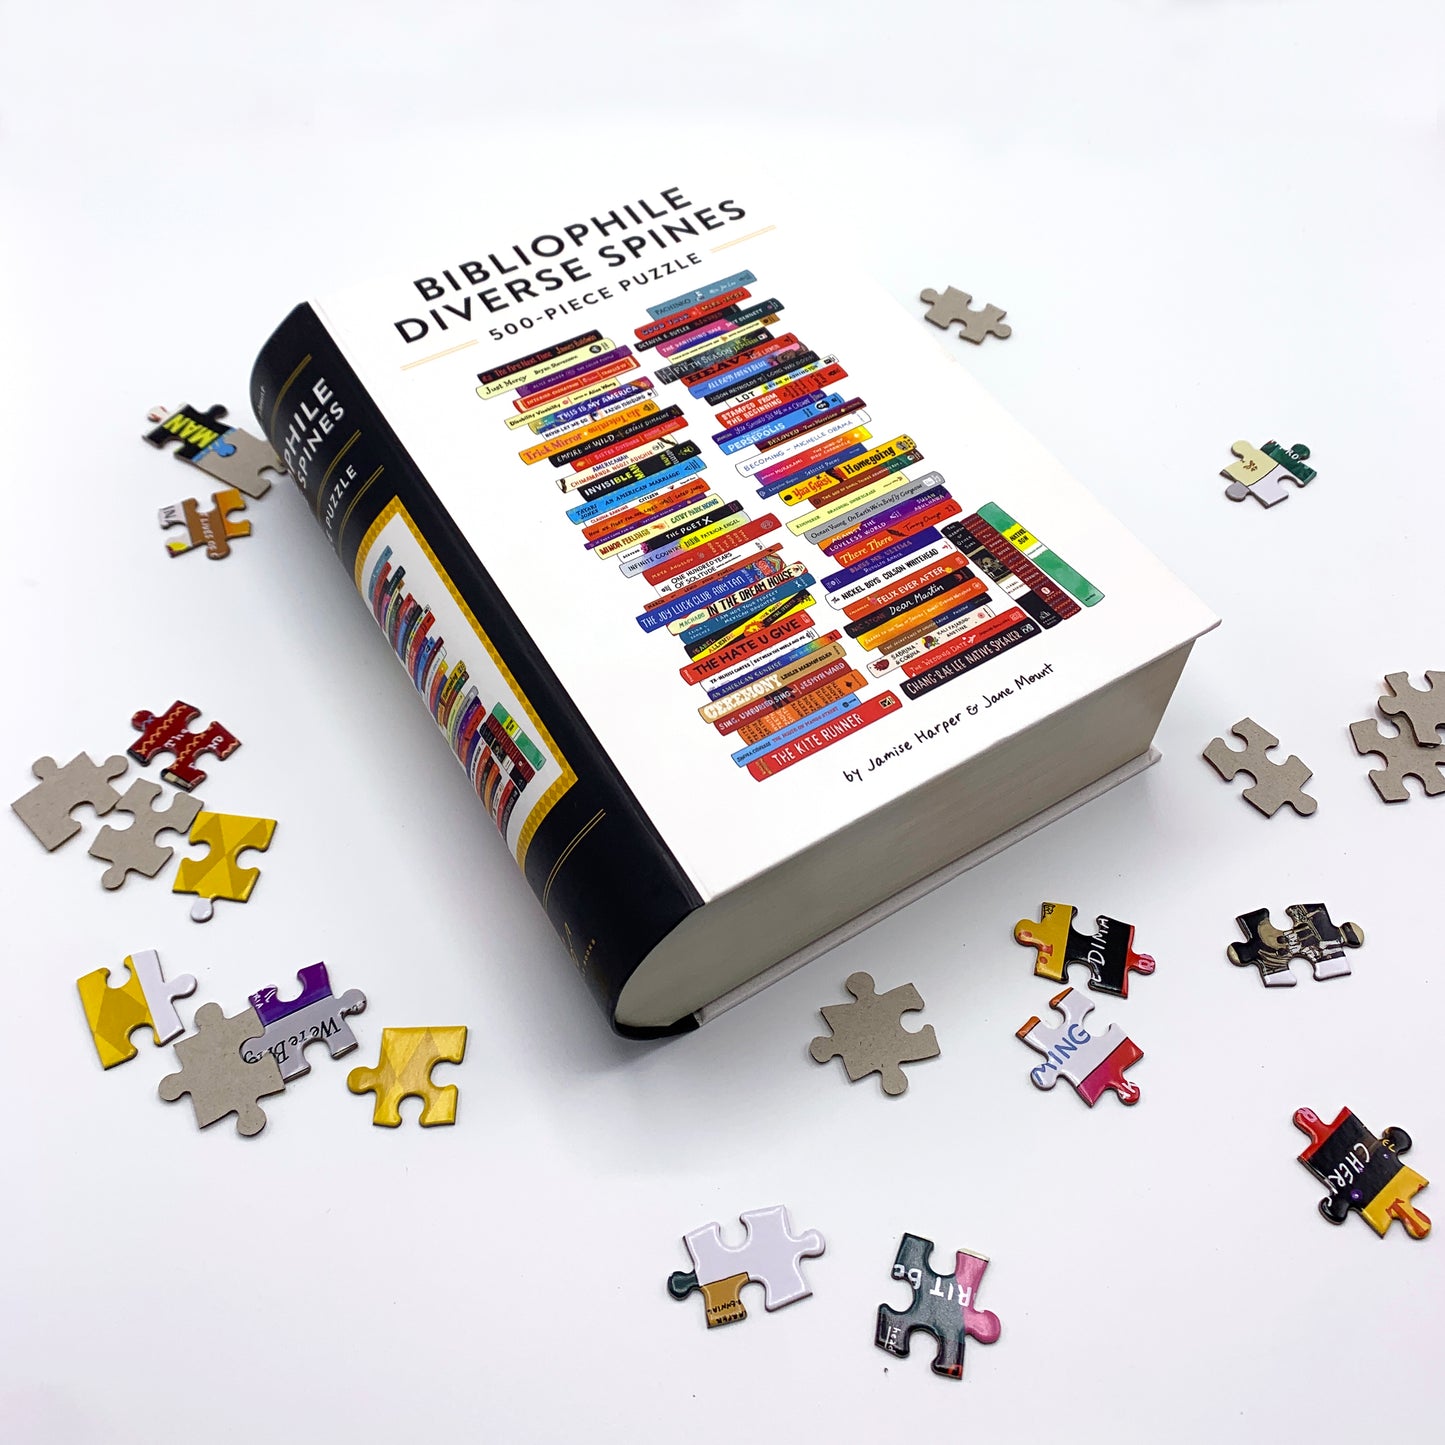 Bibliophile Diverse Spines Puzzle